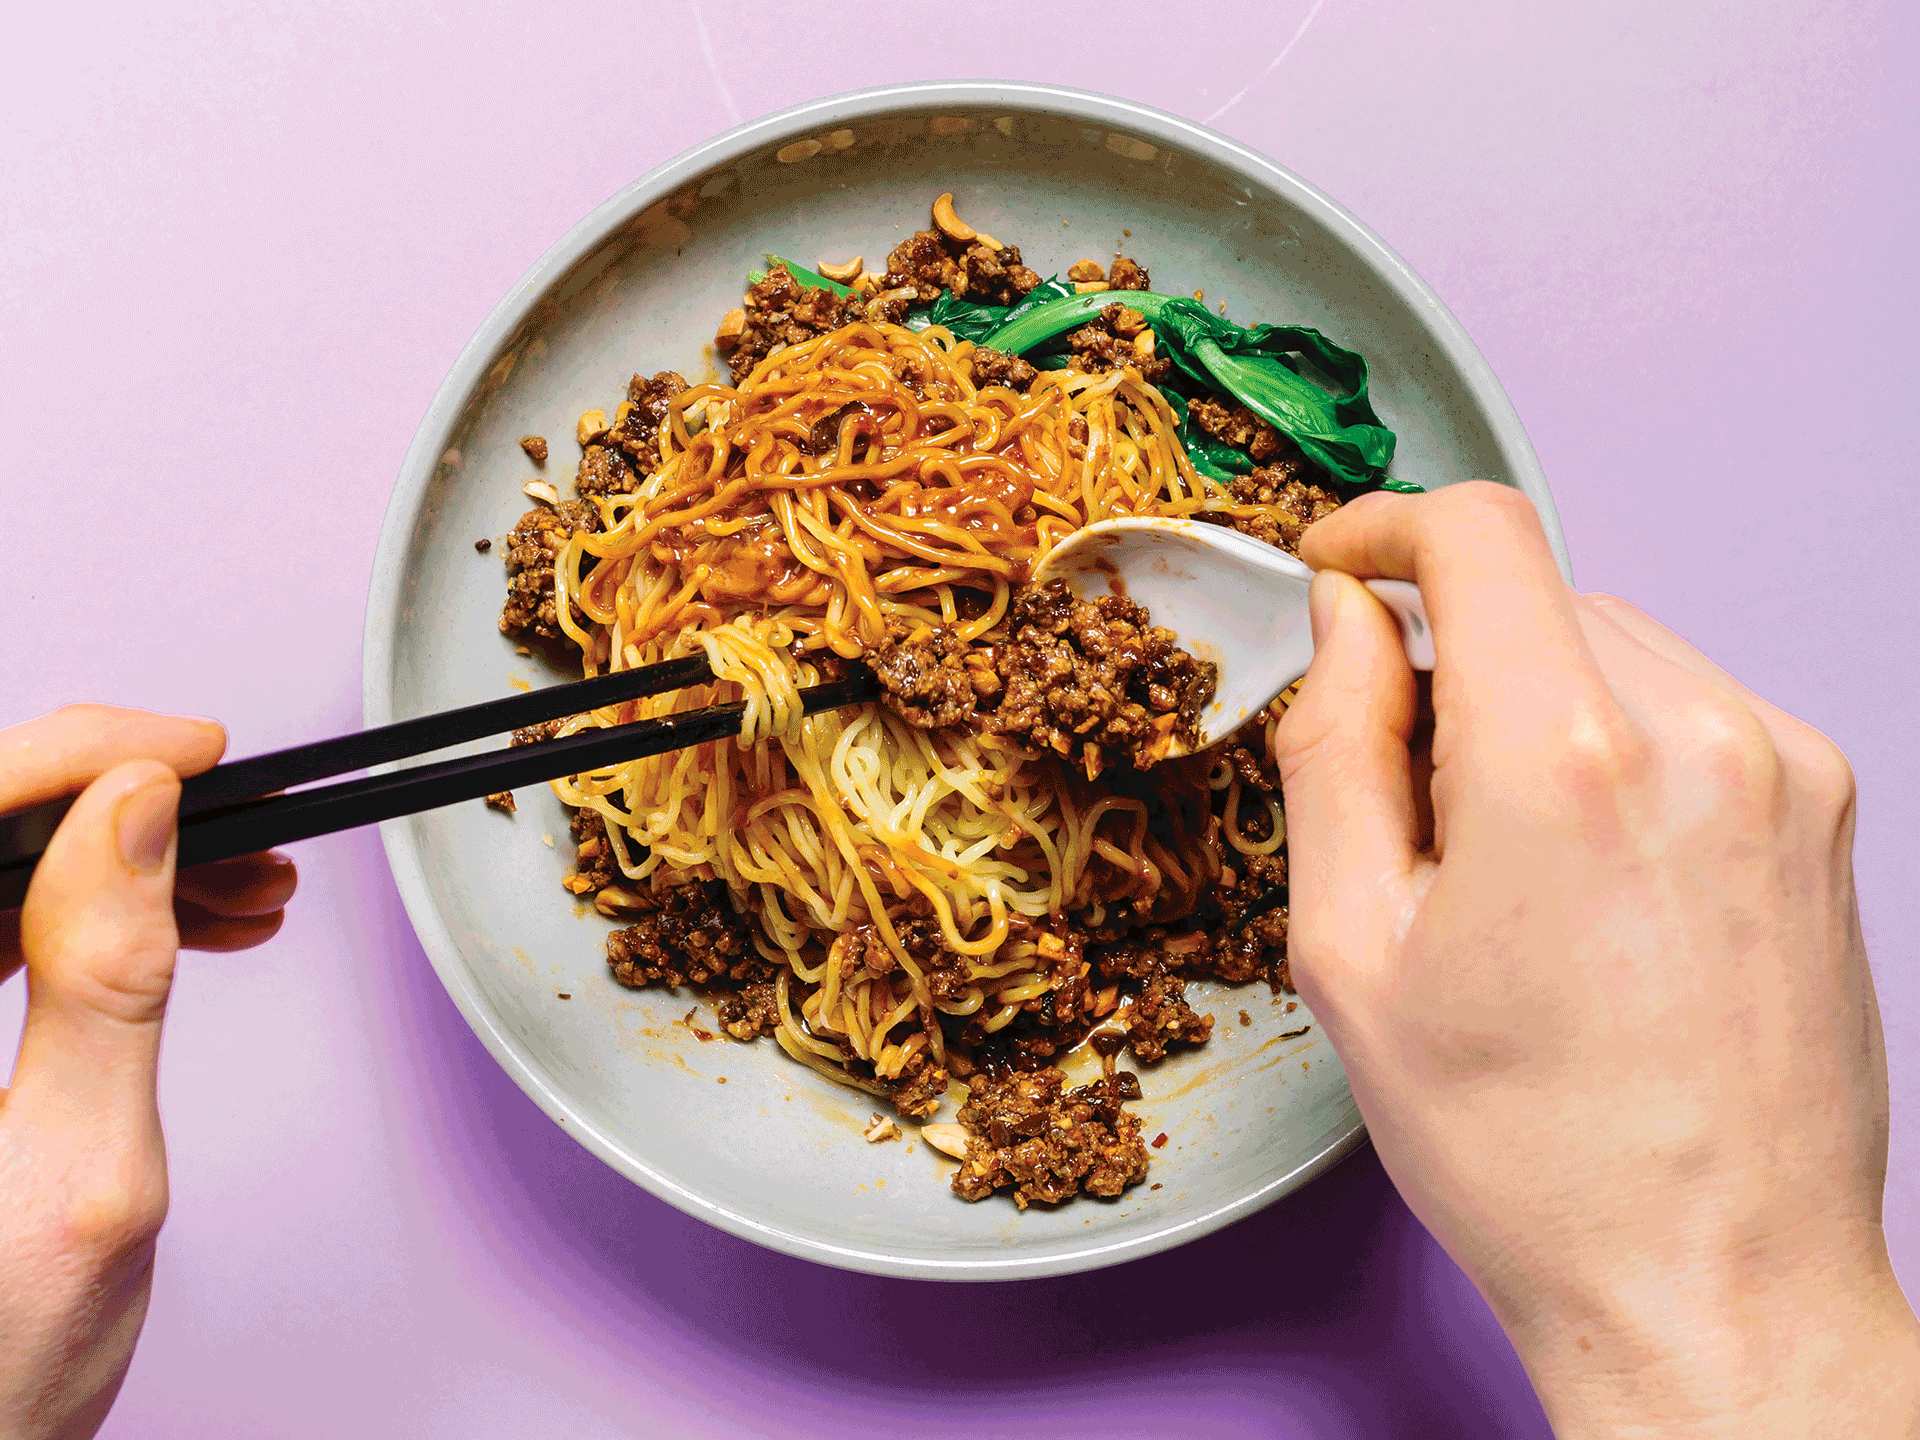 Best restaurants Toronto | Sunnys Chinese Dan Dan noodles